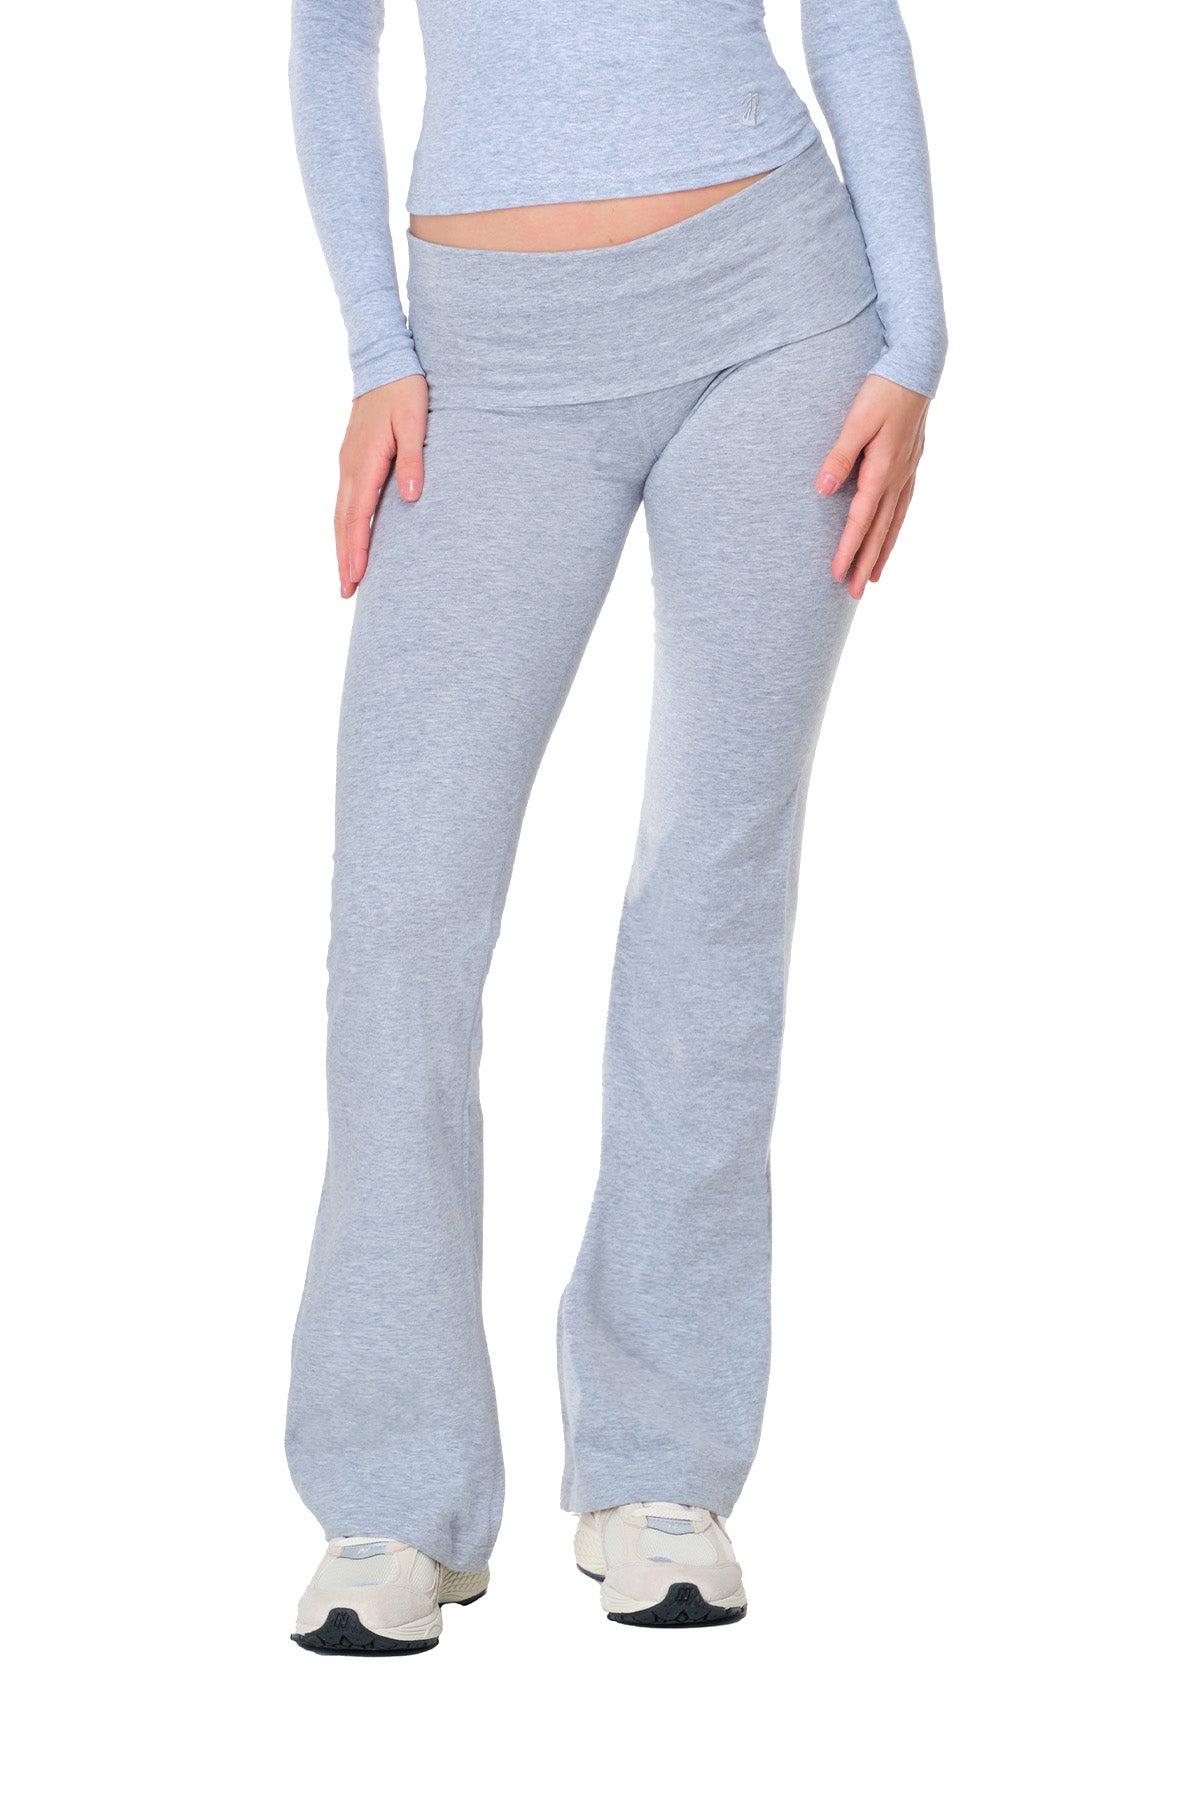 36 Long Inseam Cotton Spandex Flare Yoga Pants